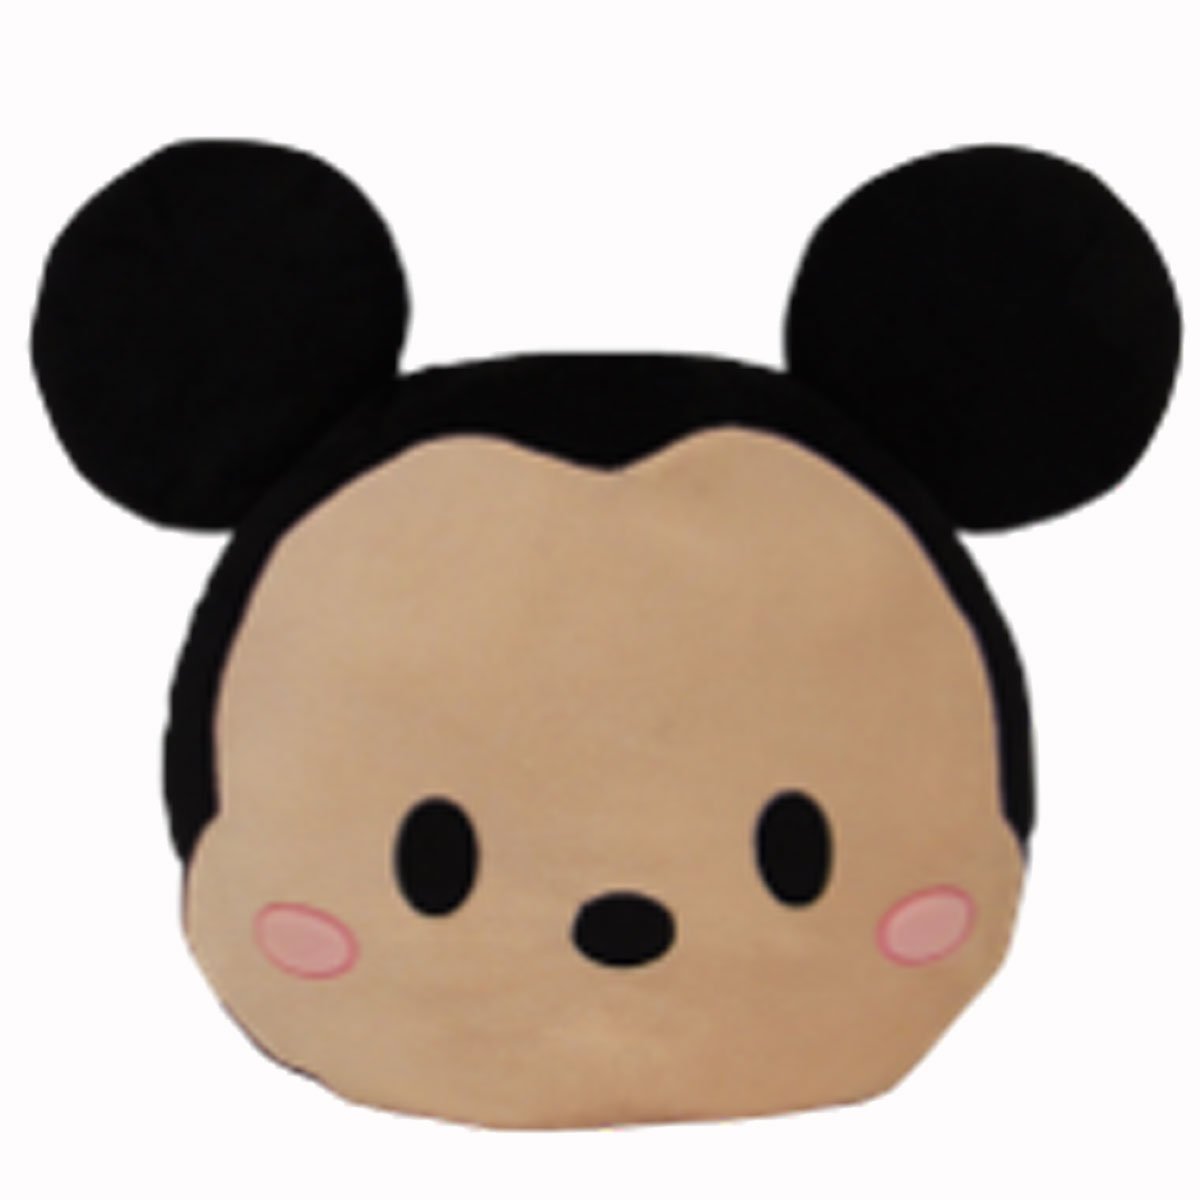 Mochila Mickey Mouse Tsum Tsum Atmpacks